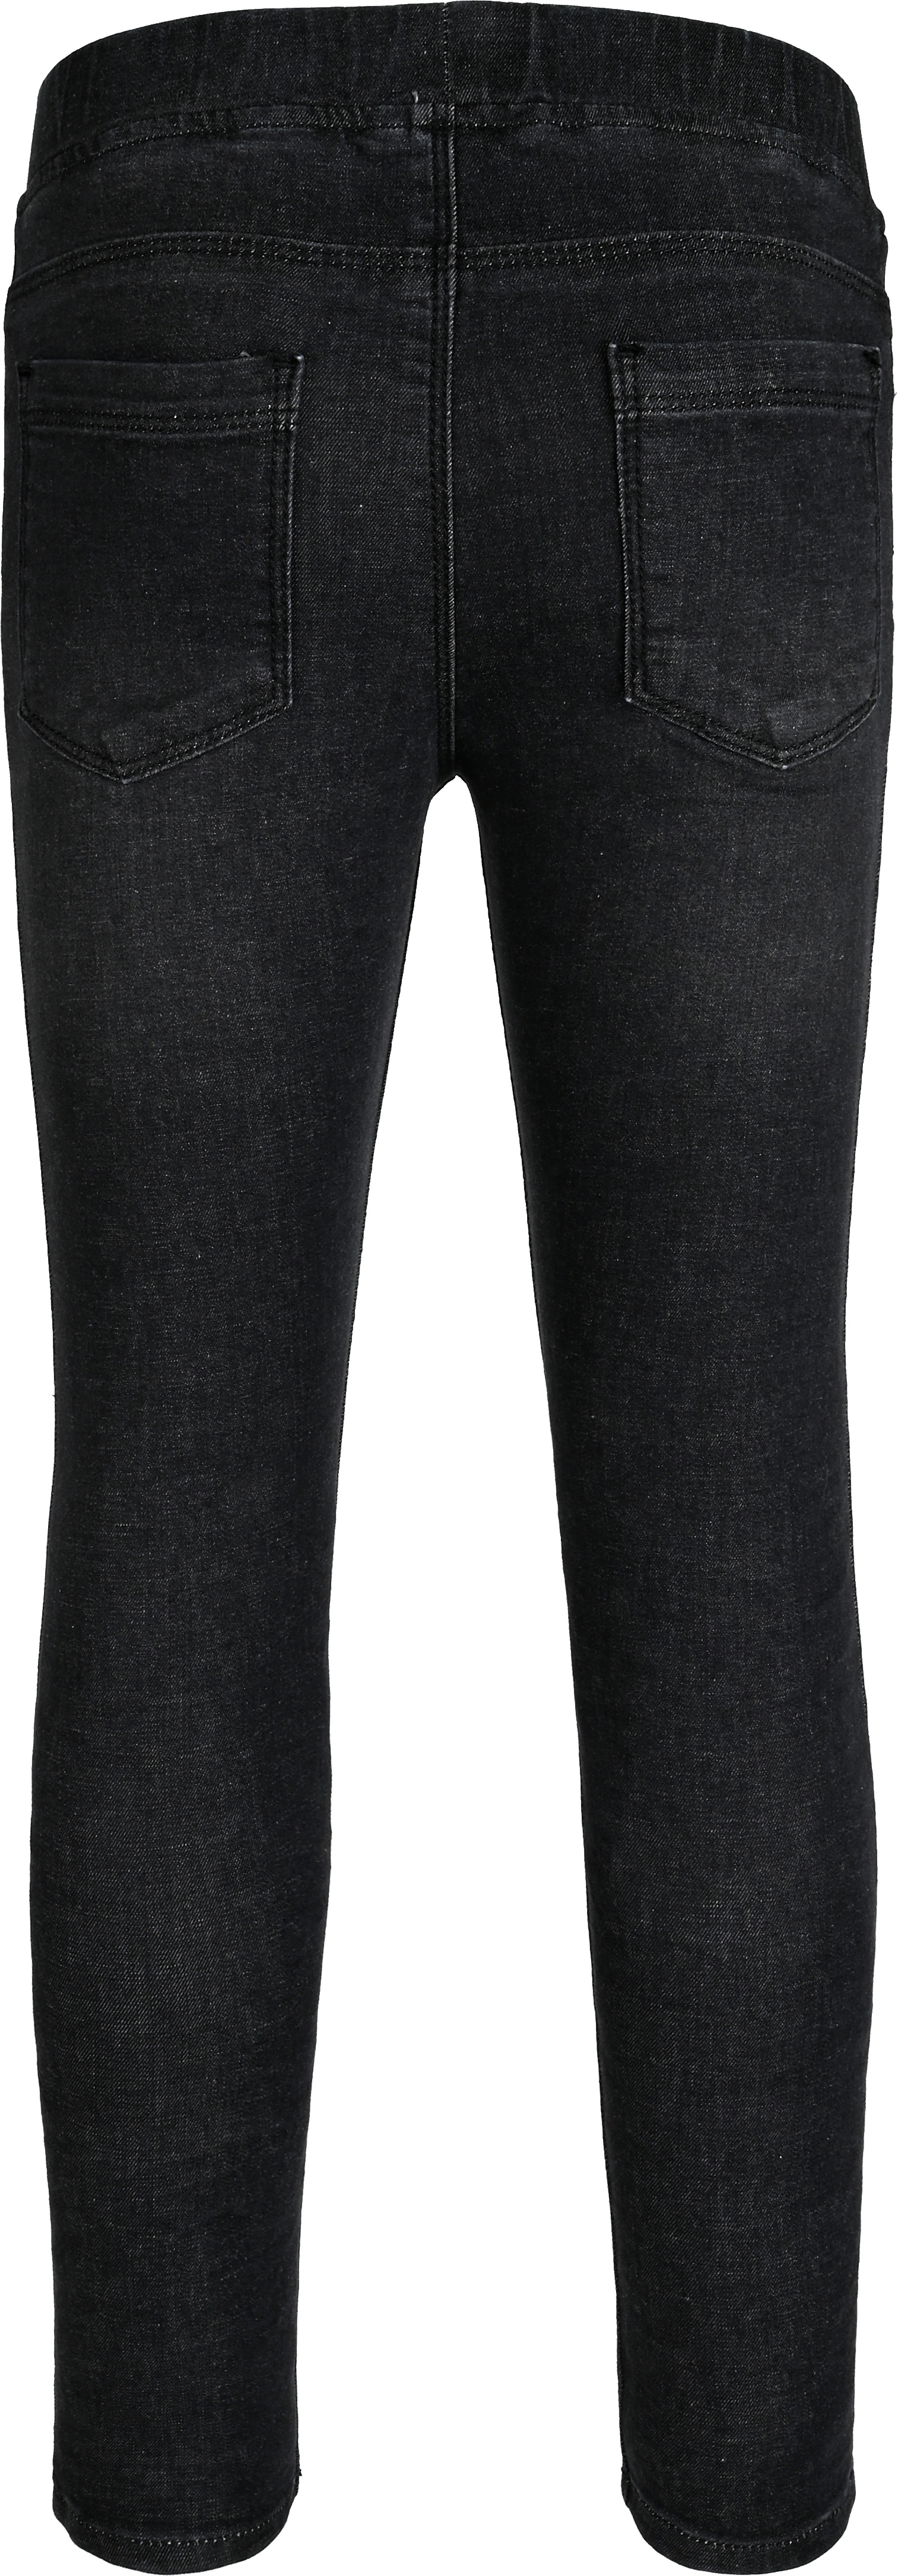 1308-NOS Girls SlipWaist Jeans Jegging, Ultrastretch, verfügbar in Normal